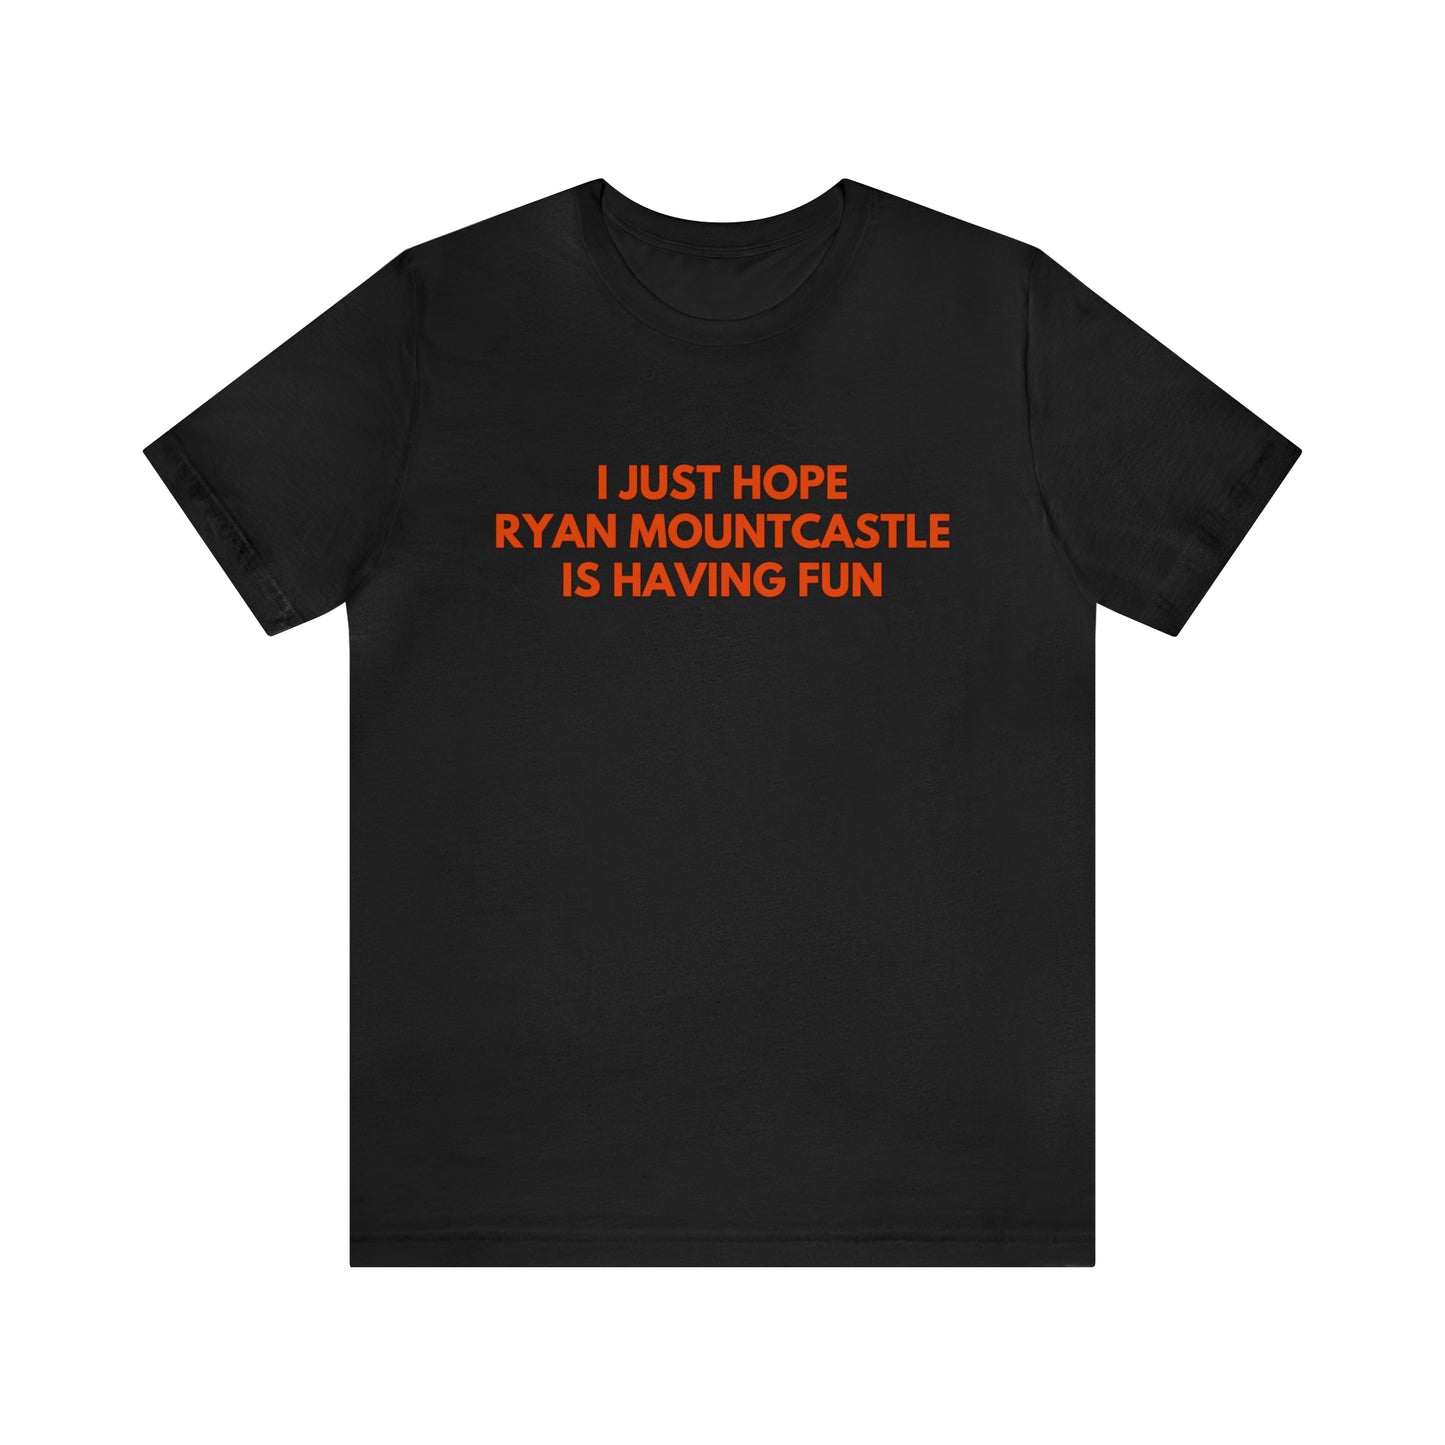 Ryan Mountcastle Having Fun - Unisex T-Shirt